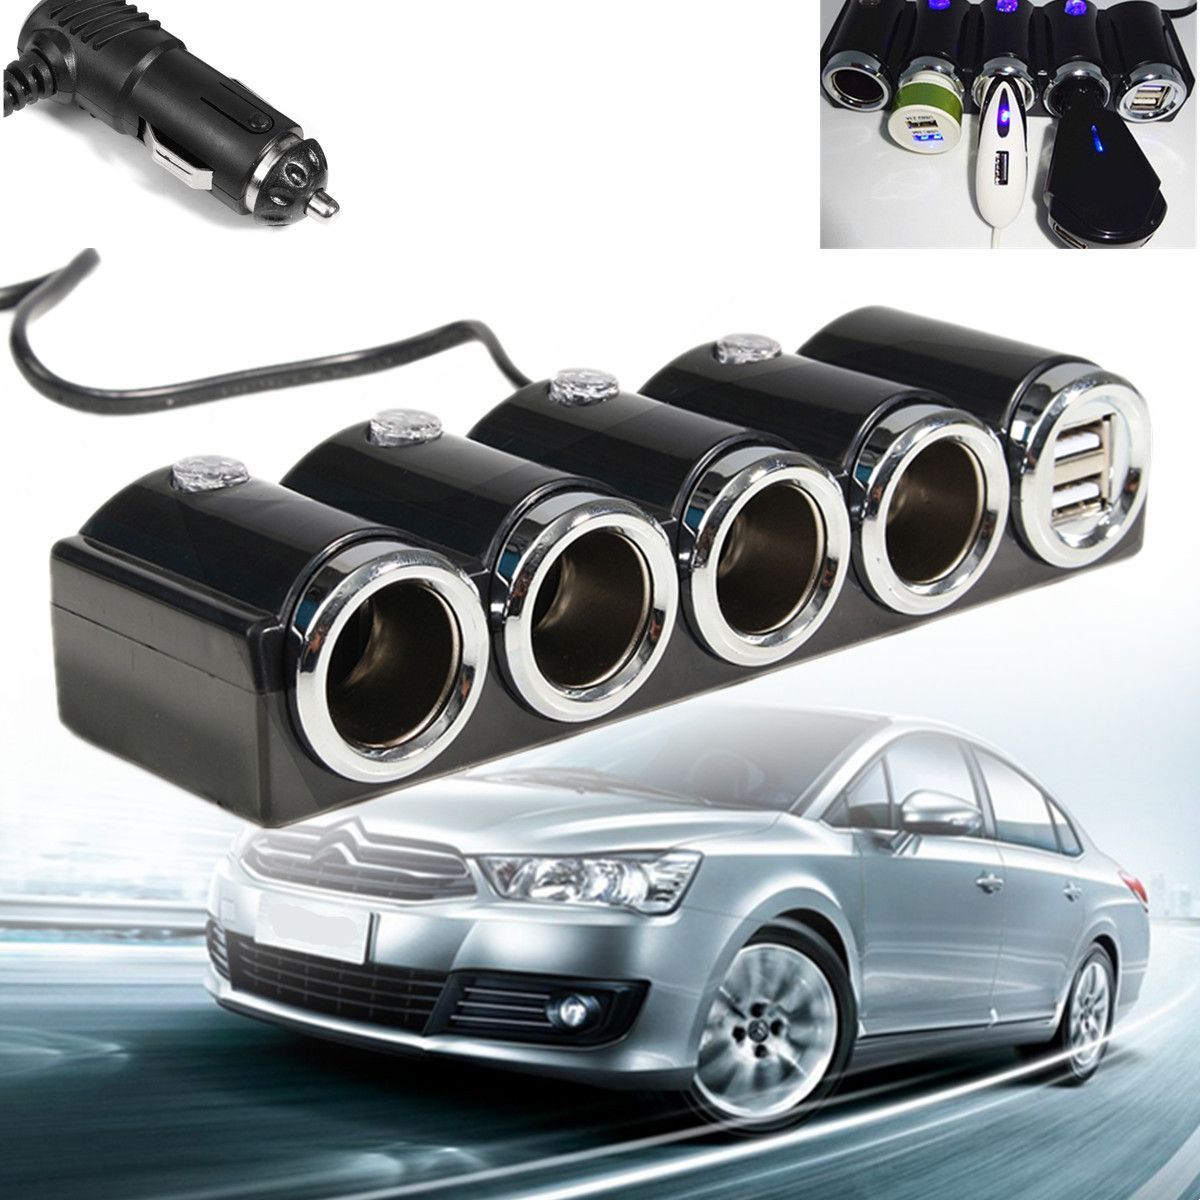 Dual-USB-4Way-Splitter-Car-Cigarette-Lighter-Socket-Power-Charger-Adapter-1224V-1136273